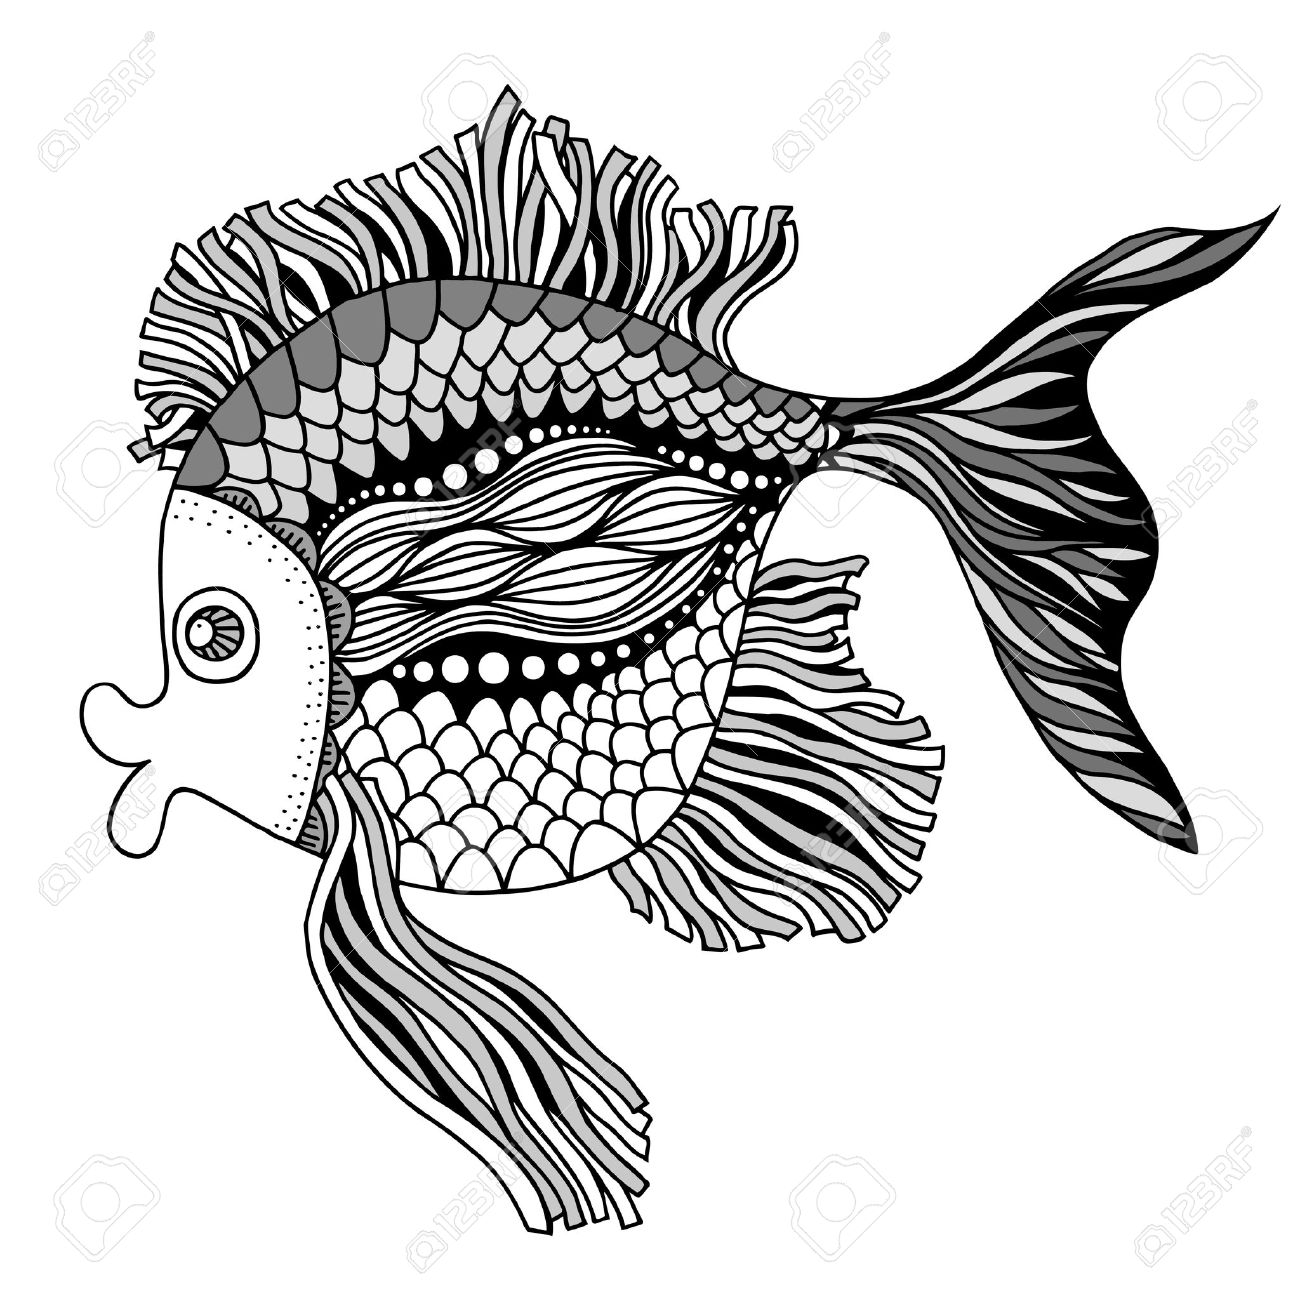 decorative fish drawing